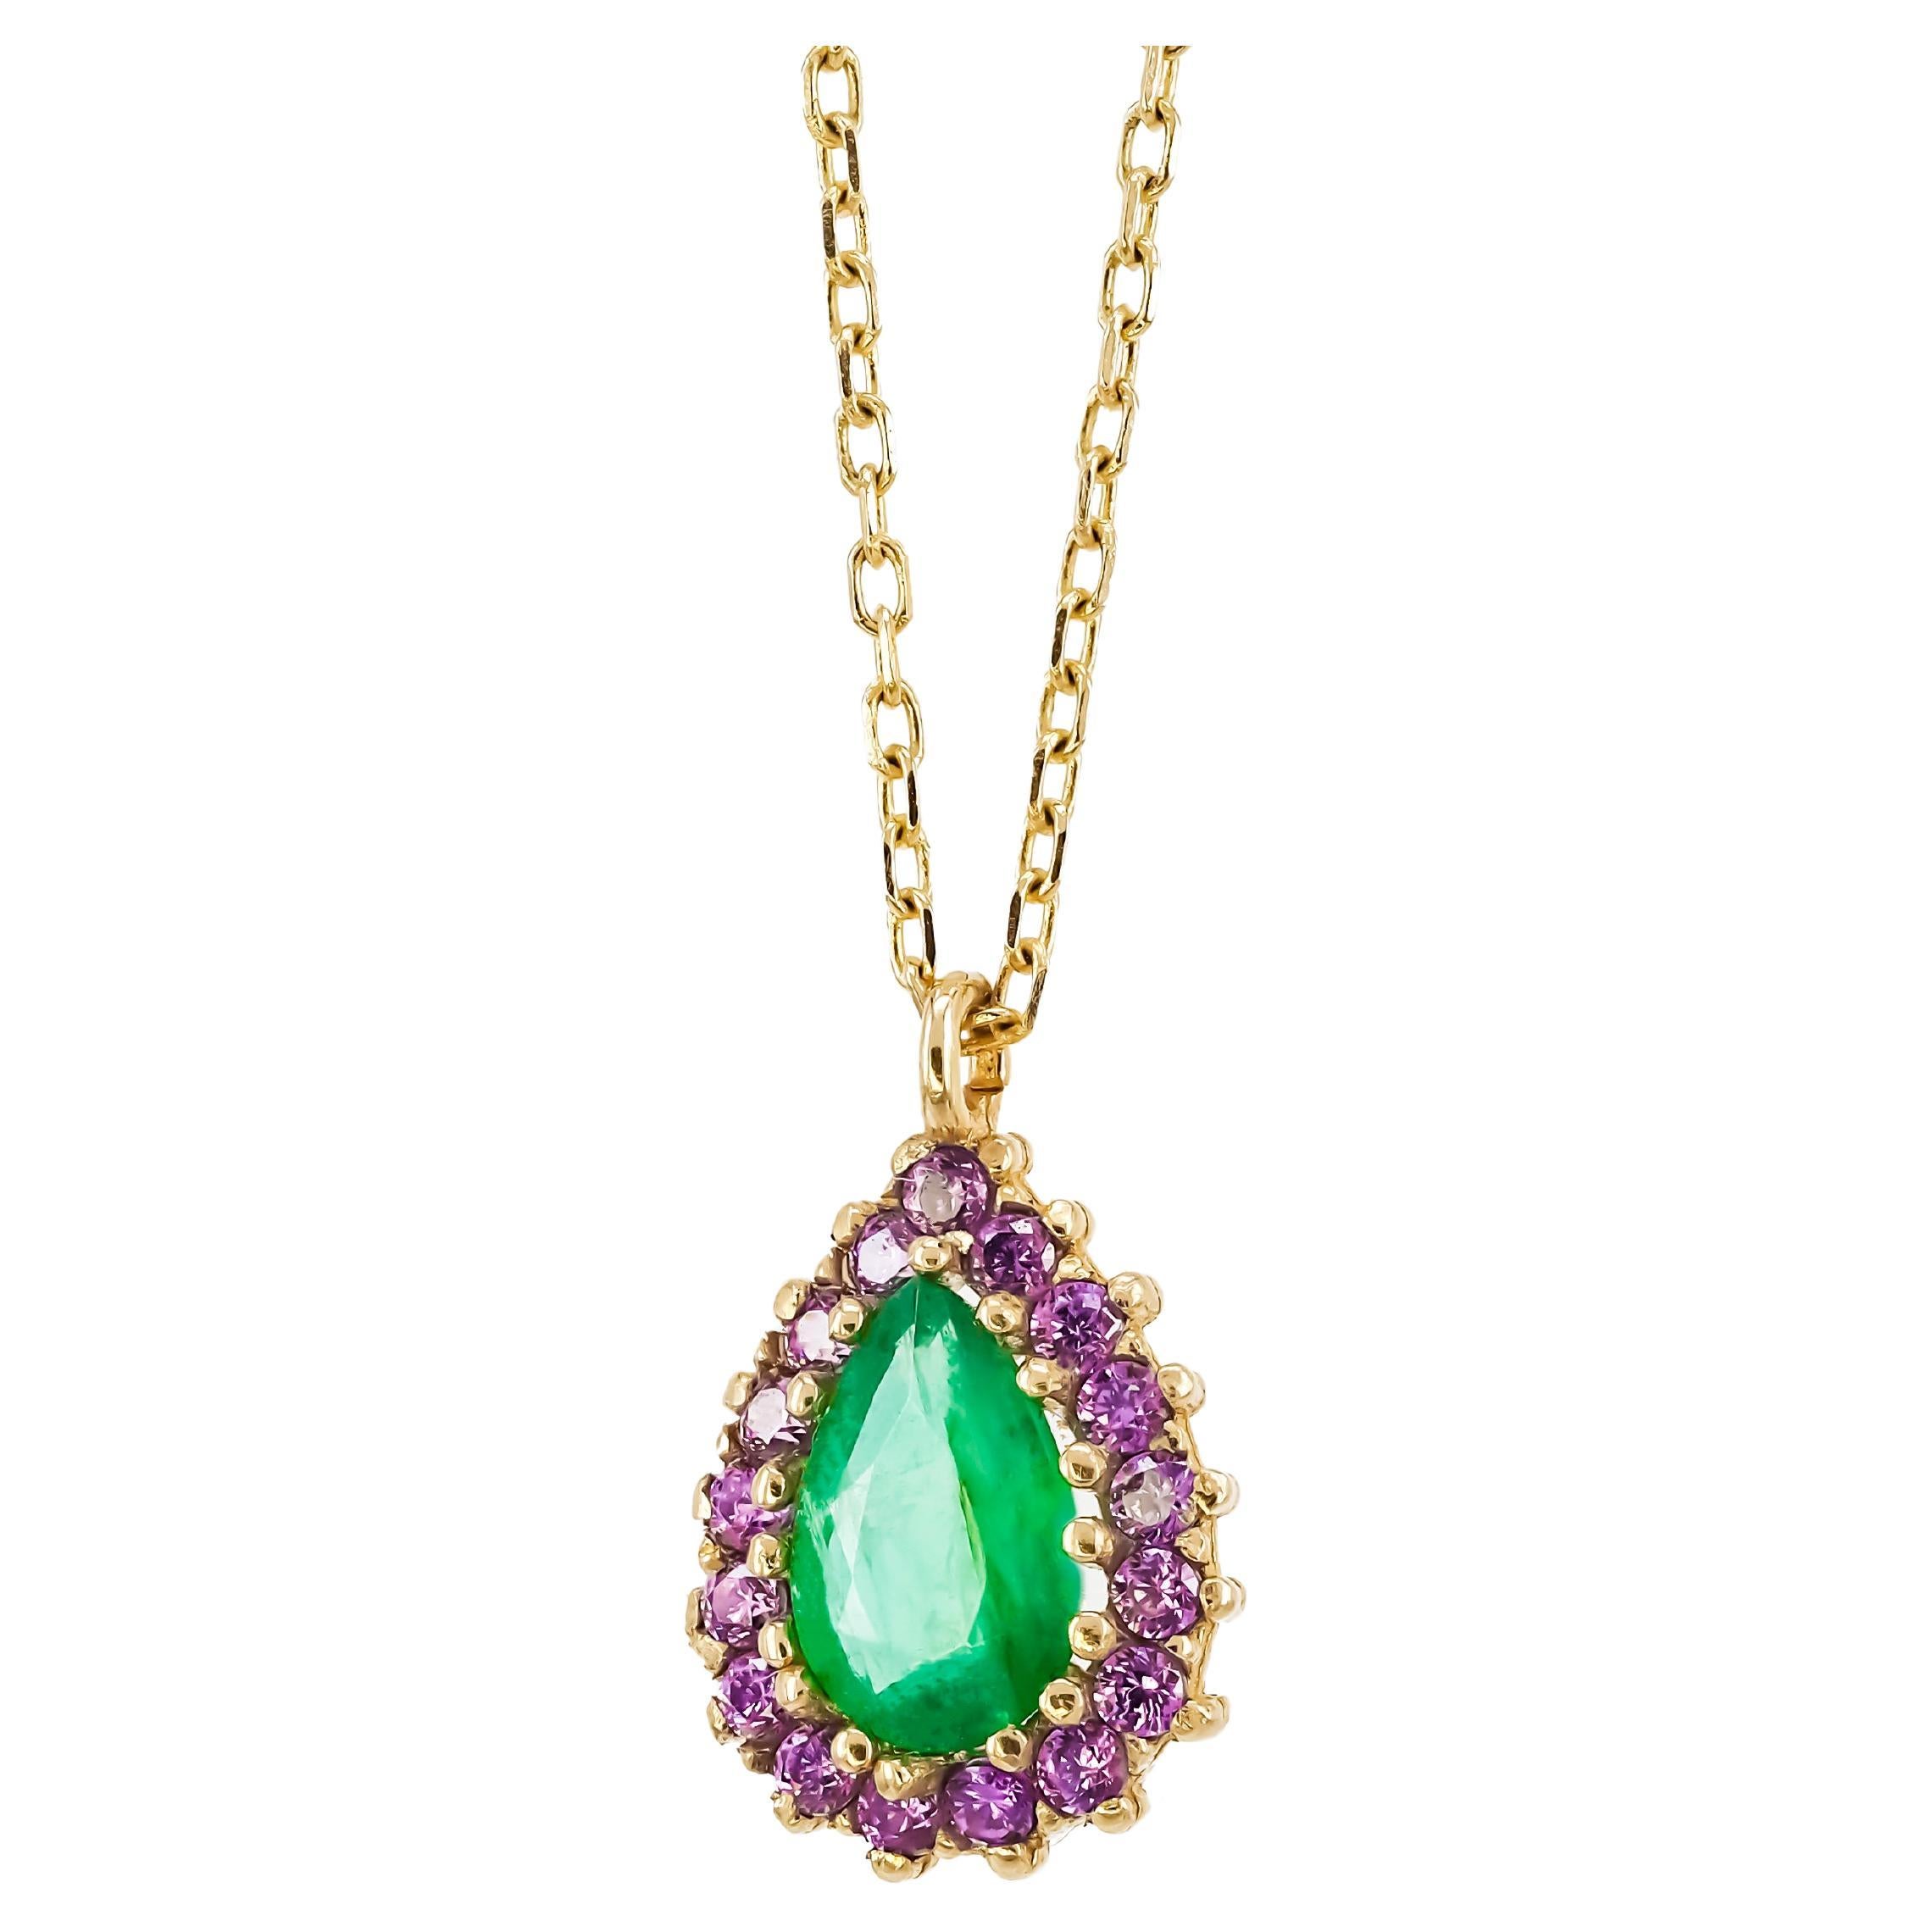 Emerald necklace pendant. 